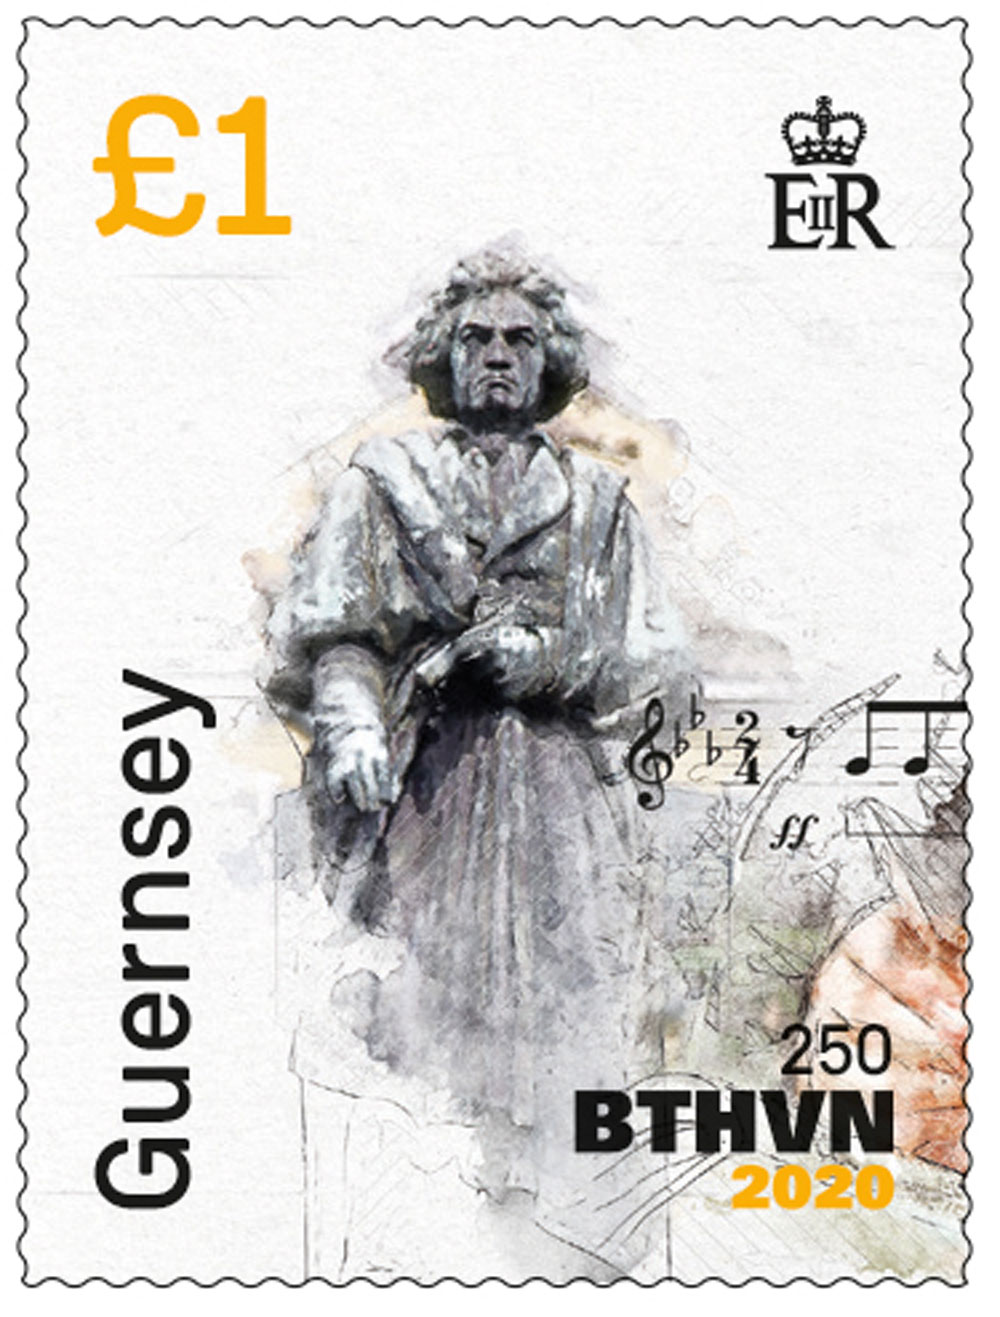 250 BTHVN - Stamp 1